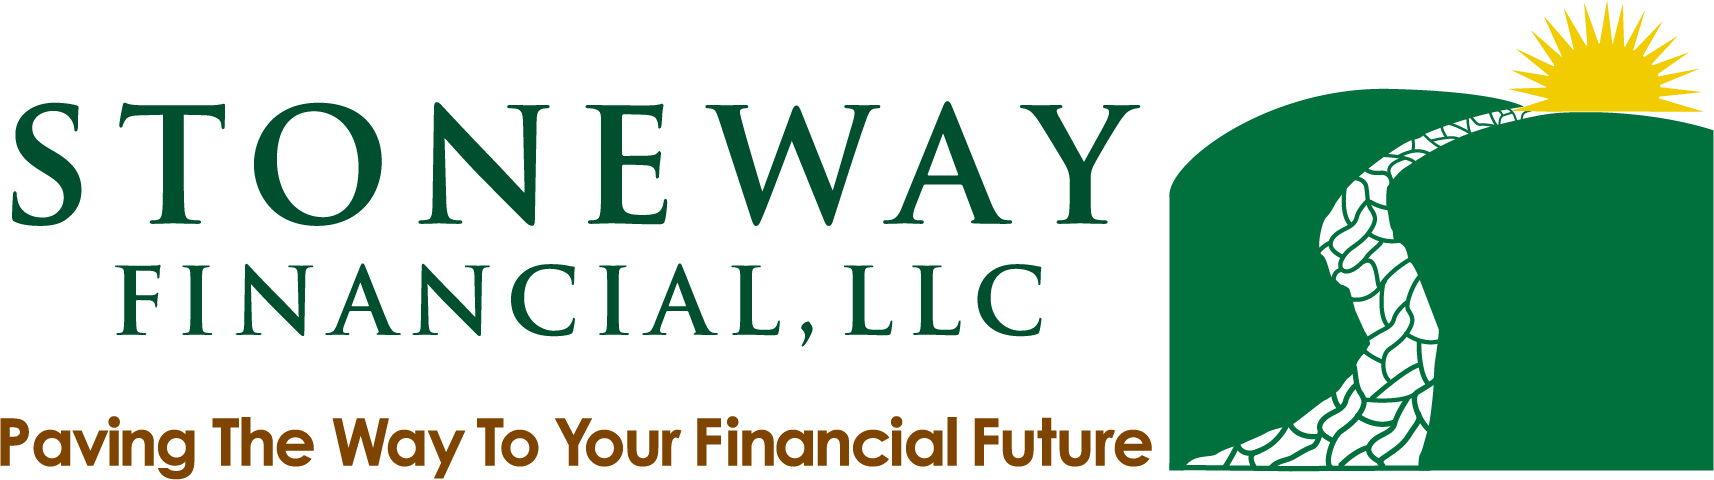 Stoneway Financial LLC